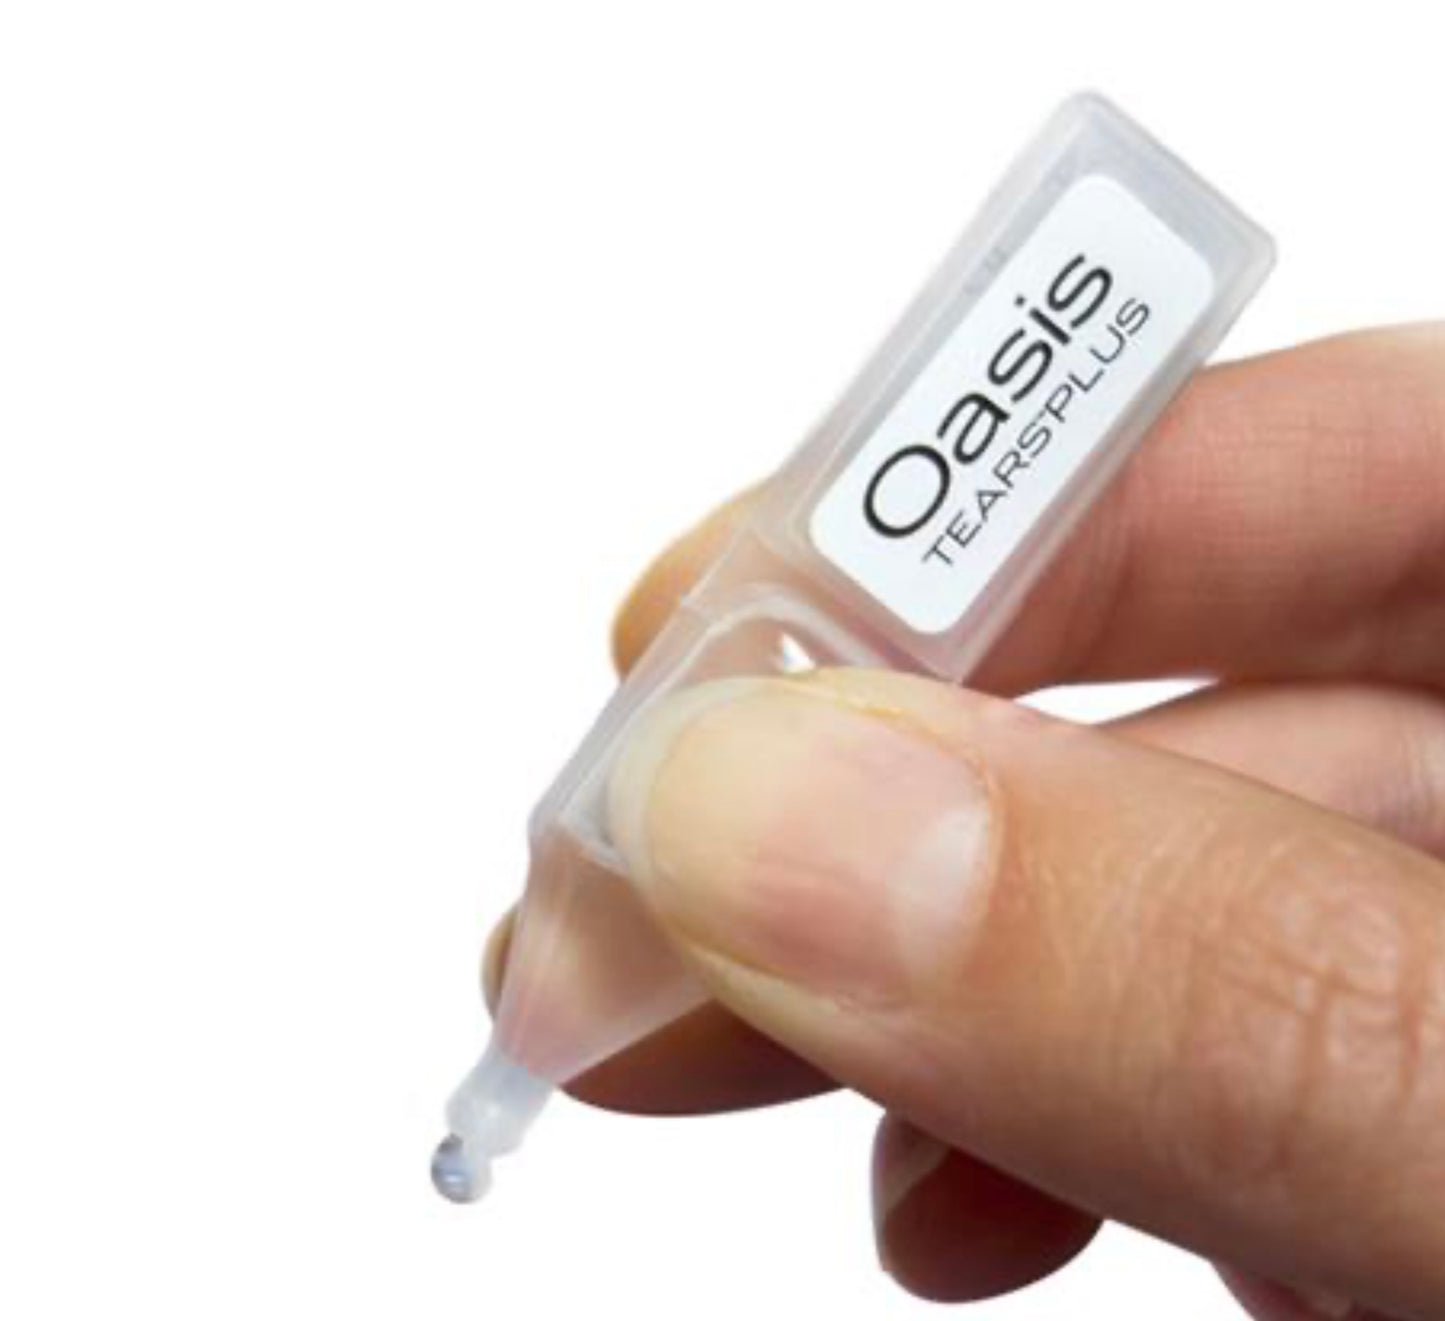 OASIS TEARS® PLUS Preservative-Free Lubricant Eye Drops